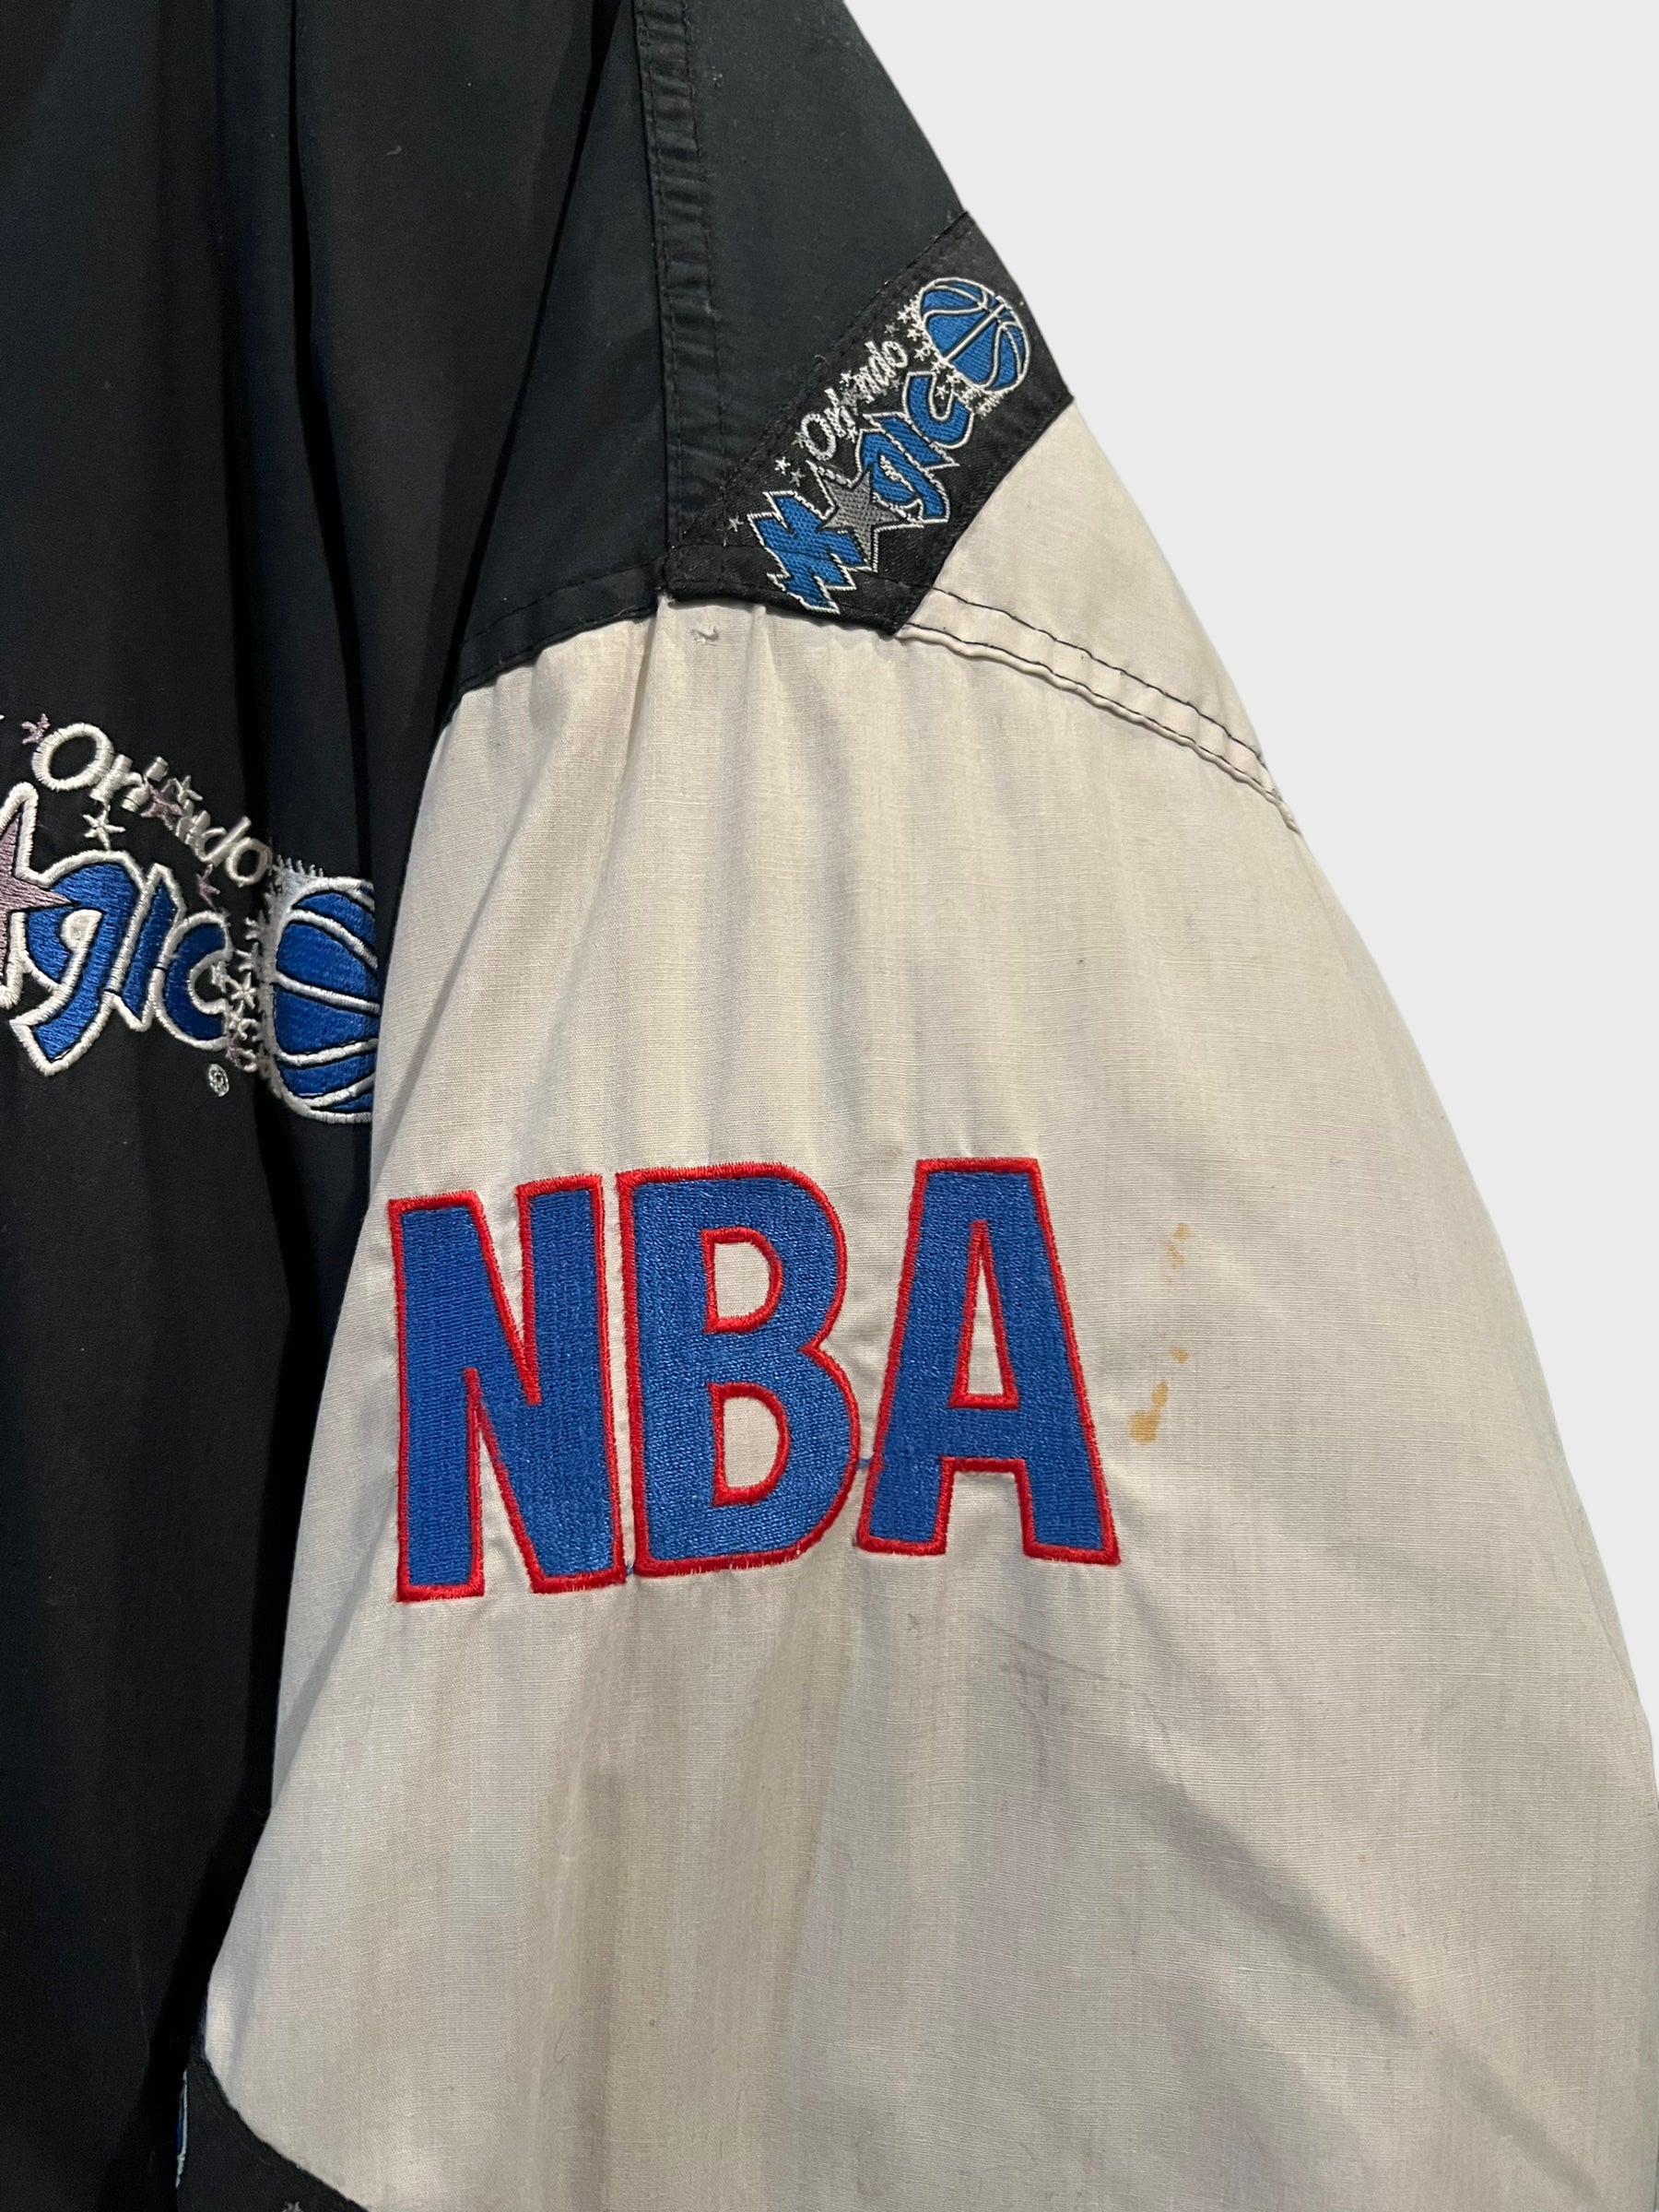 Orlando Magic NBA jacket